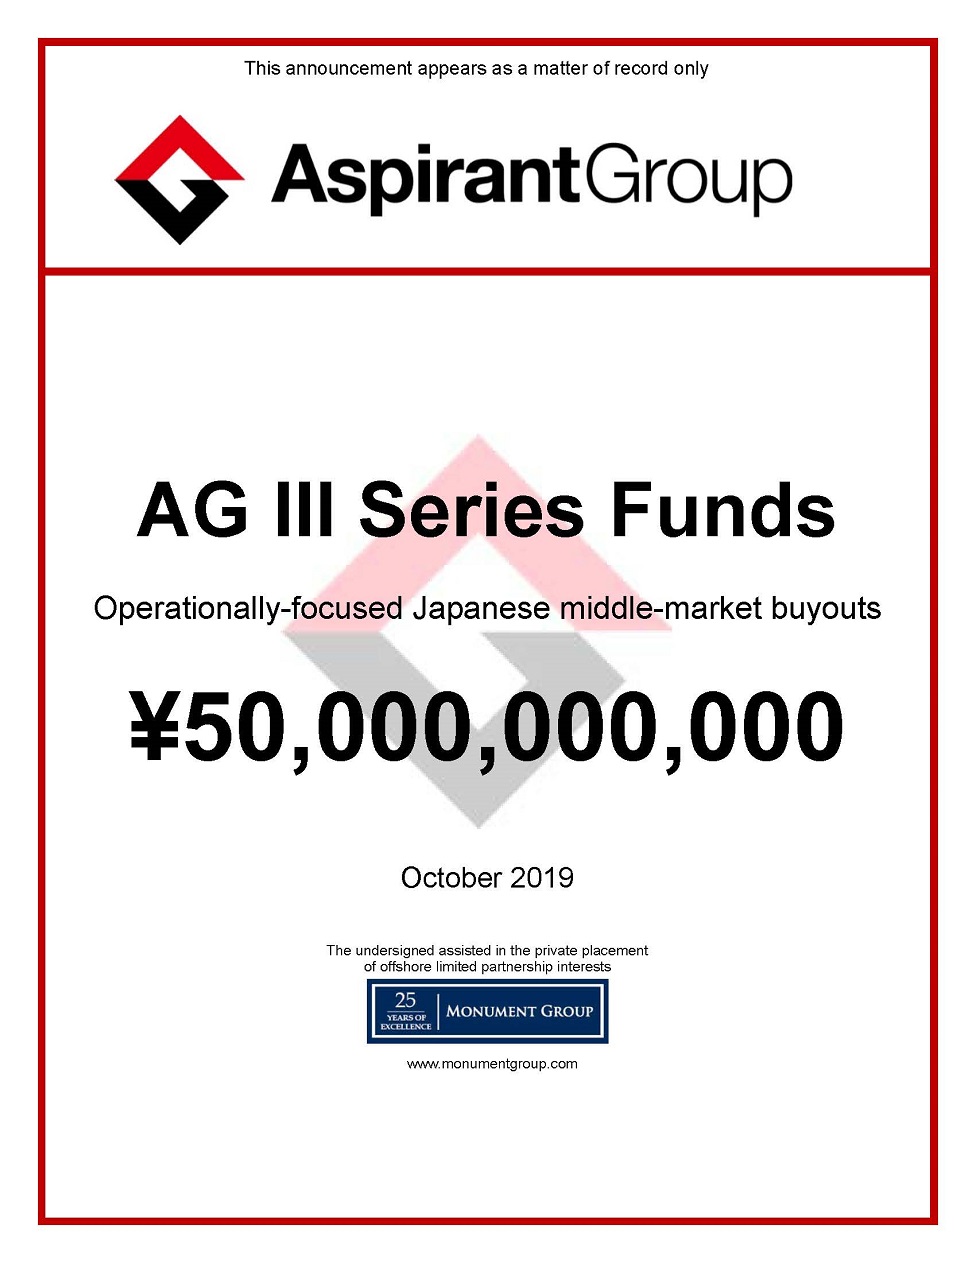 AG III Series Funds